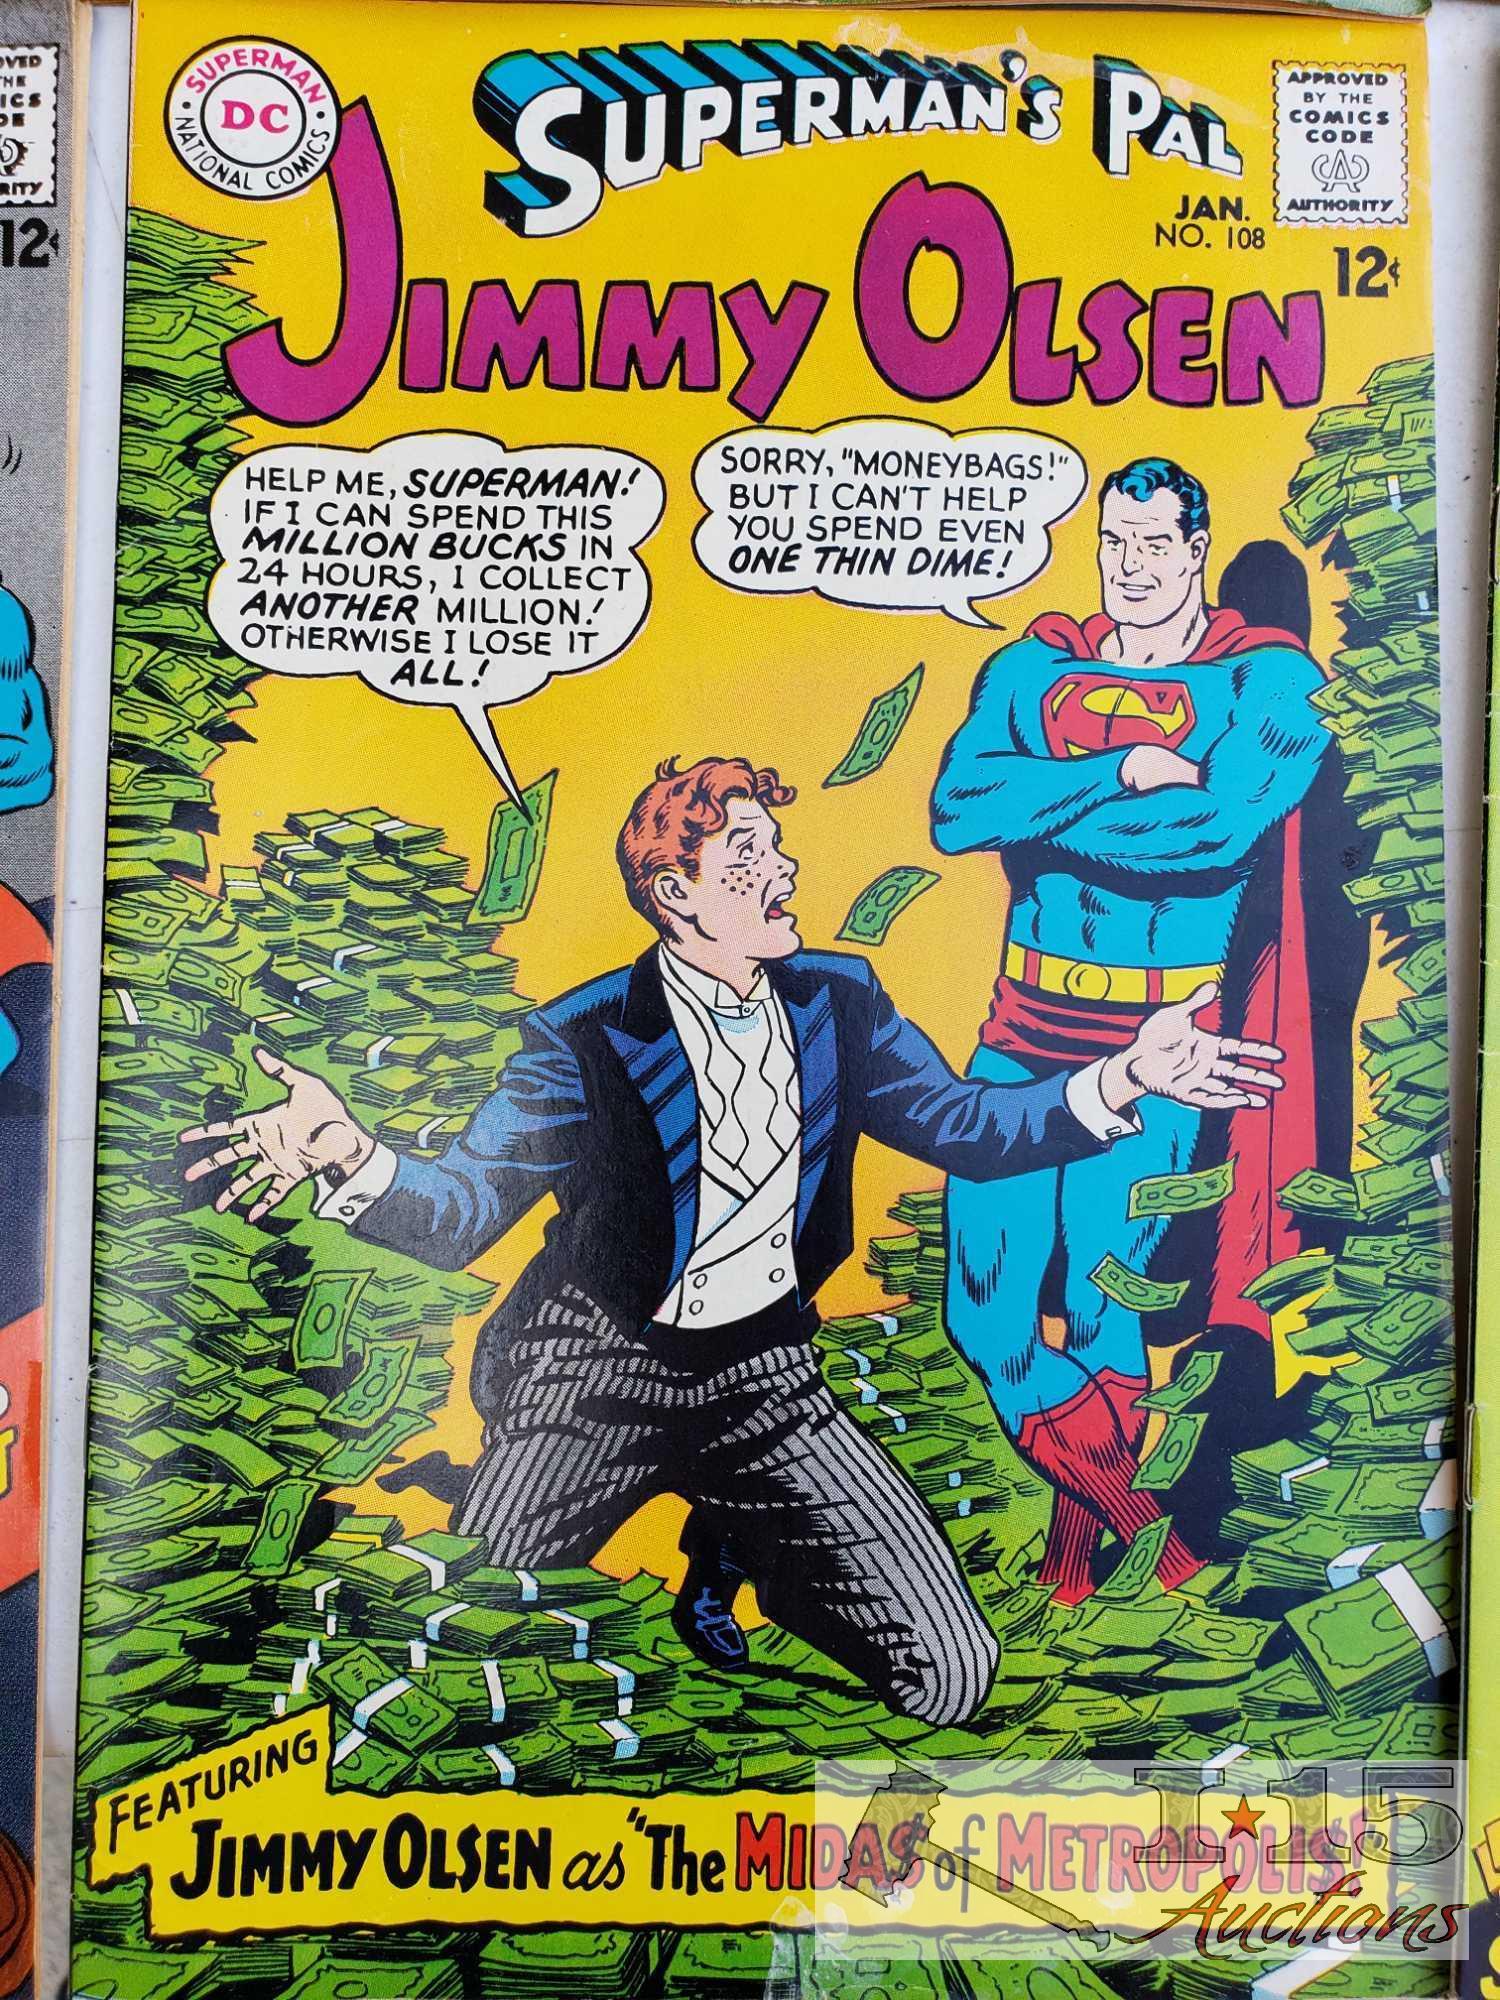 24 DC Comics Superman, Action Comics, and Superman's Pal Jimmy Olsen